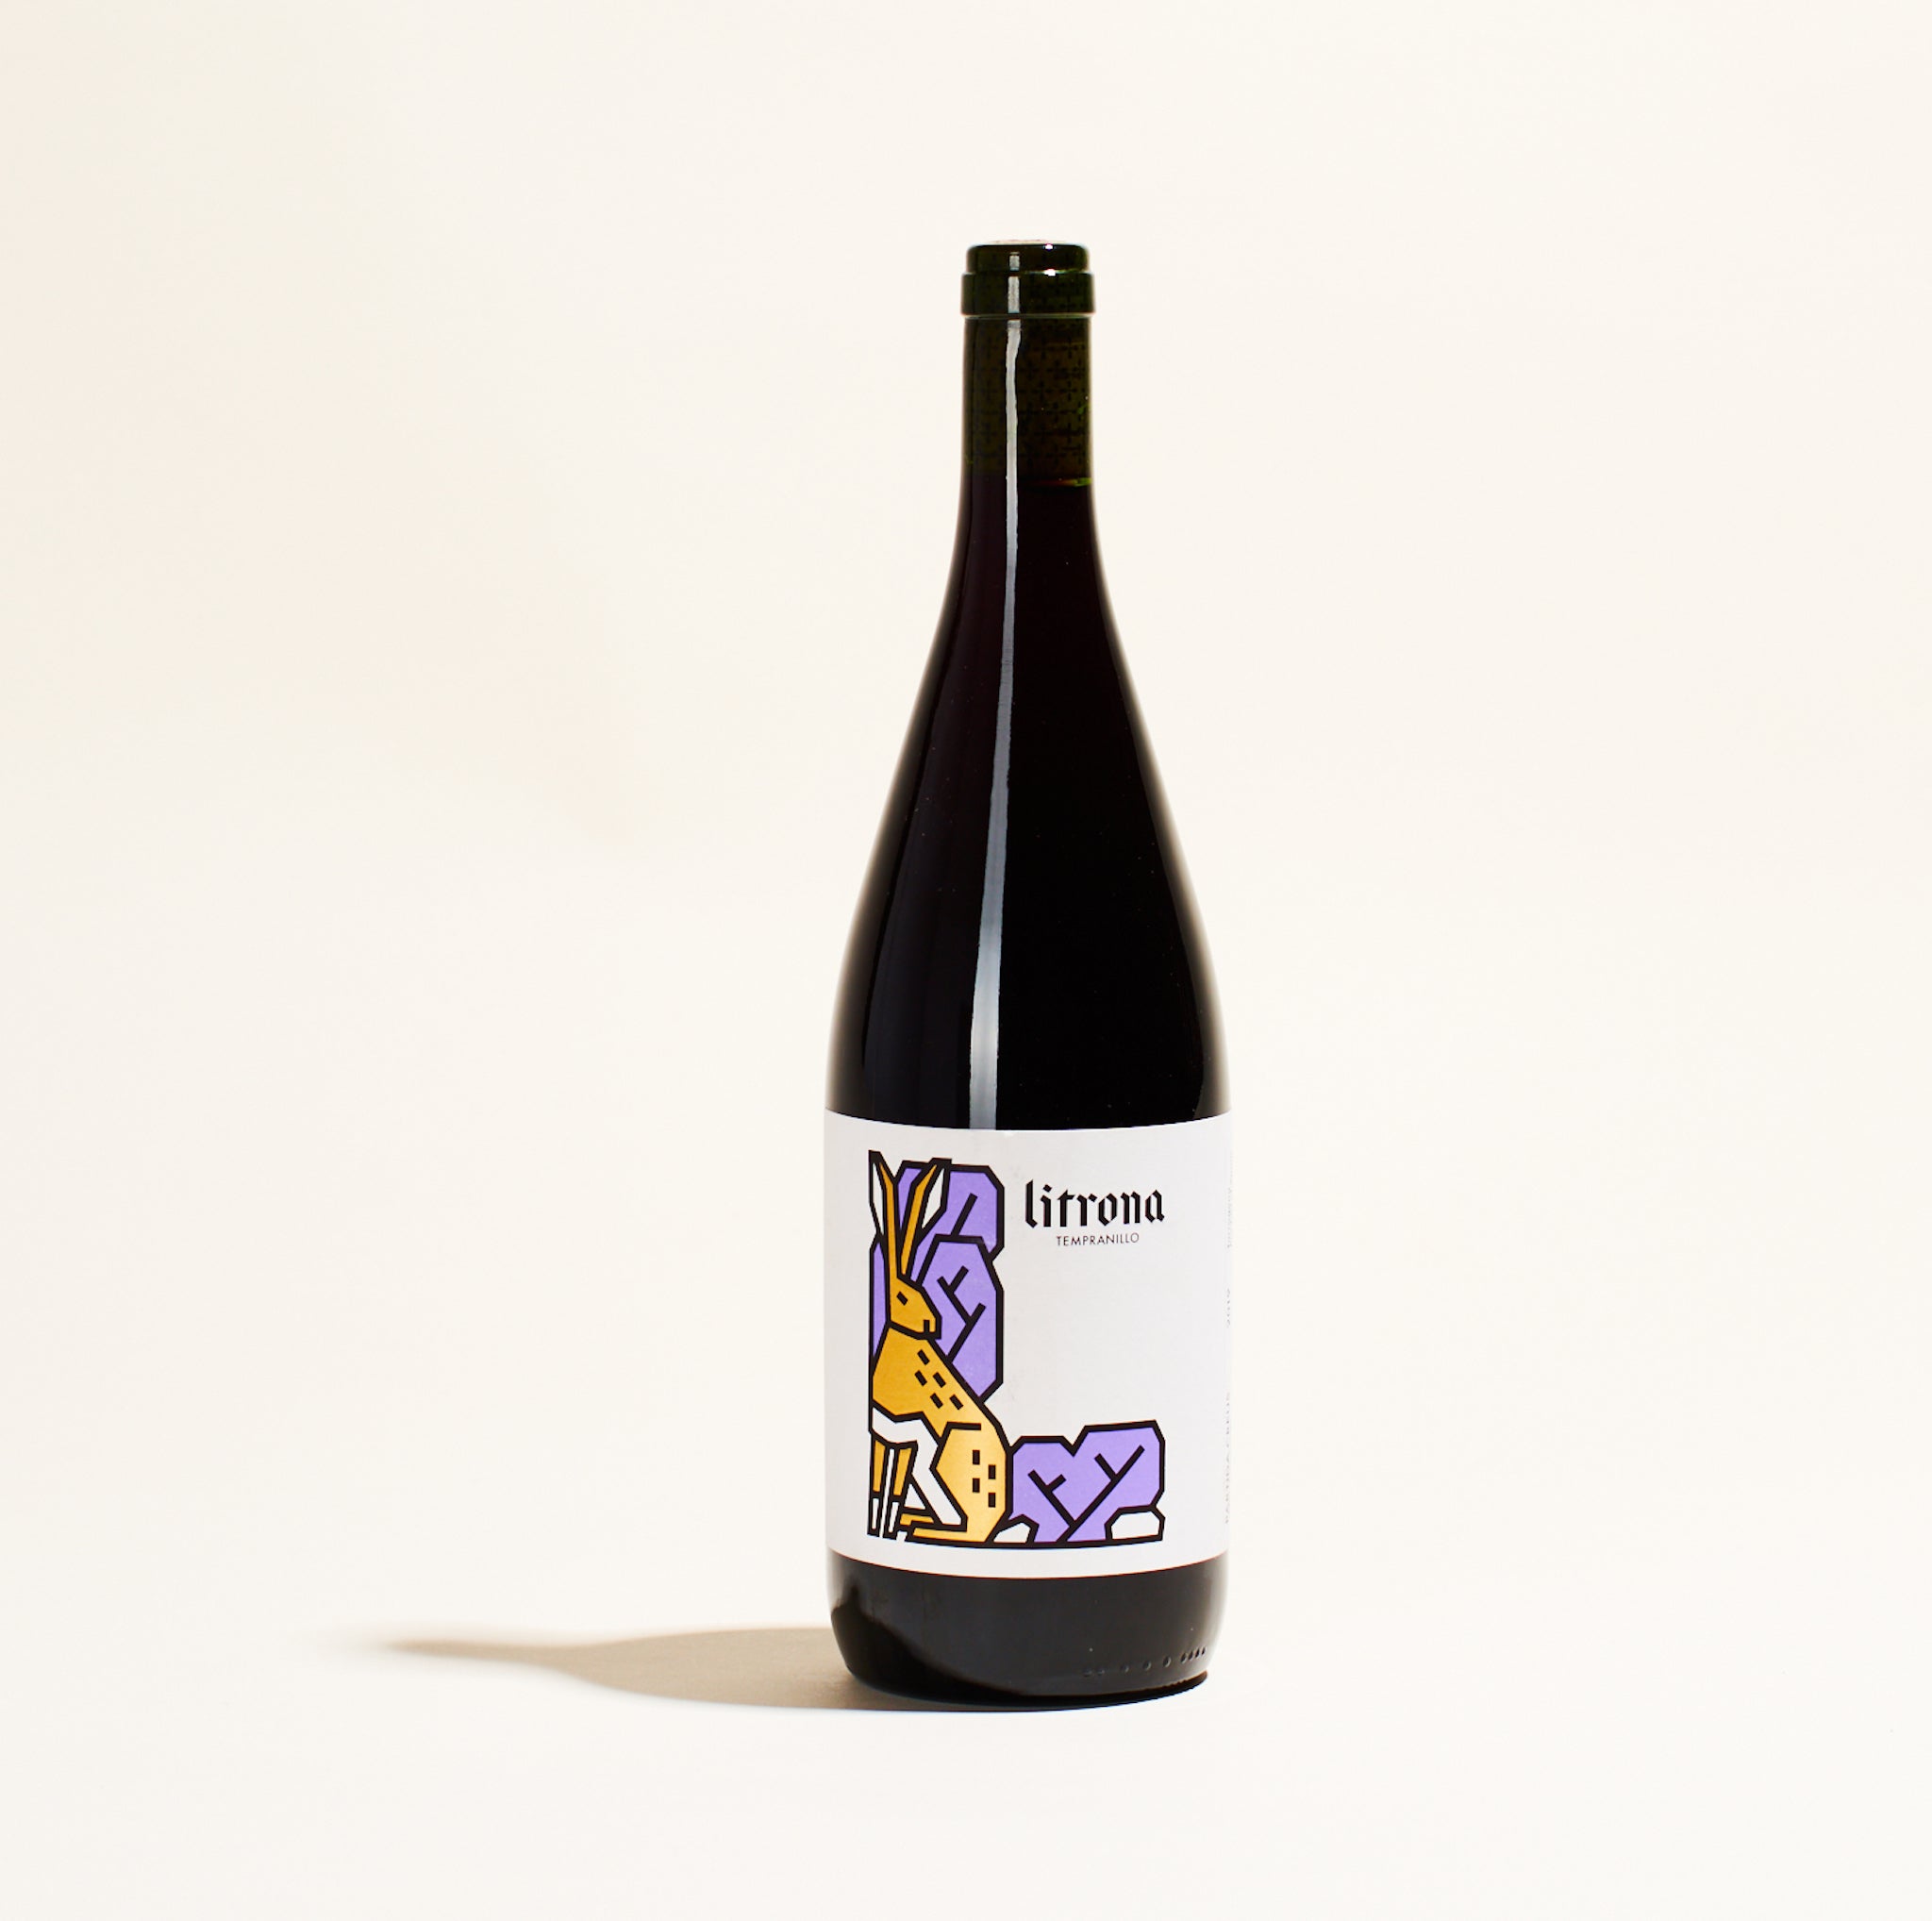 tempranillo litrona catalunya spain natural red wine bottle